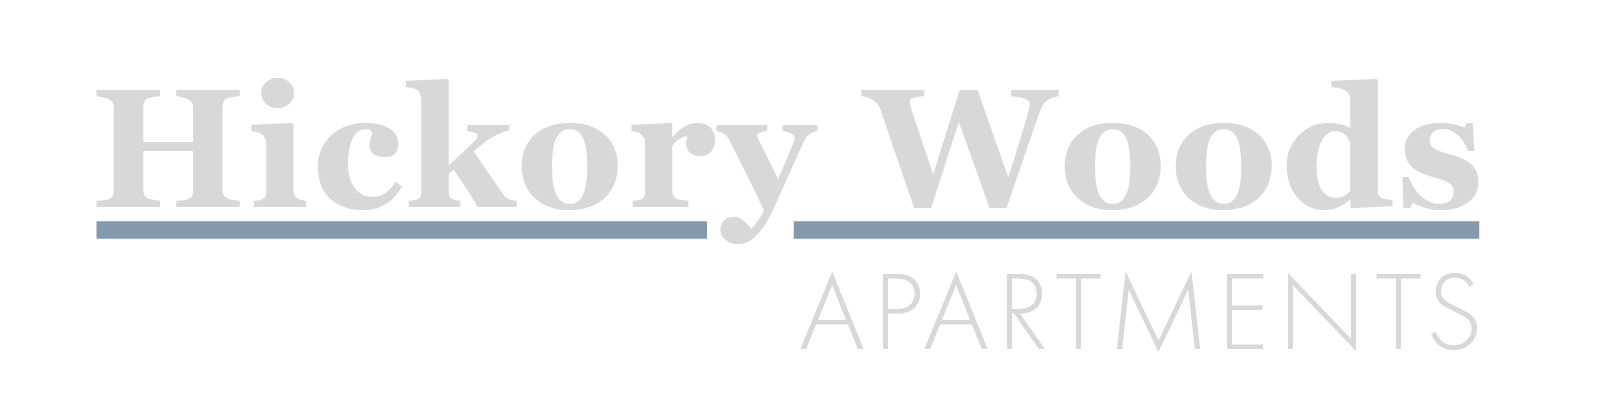 Hickory Woods Apartments Logo